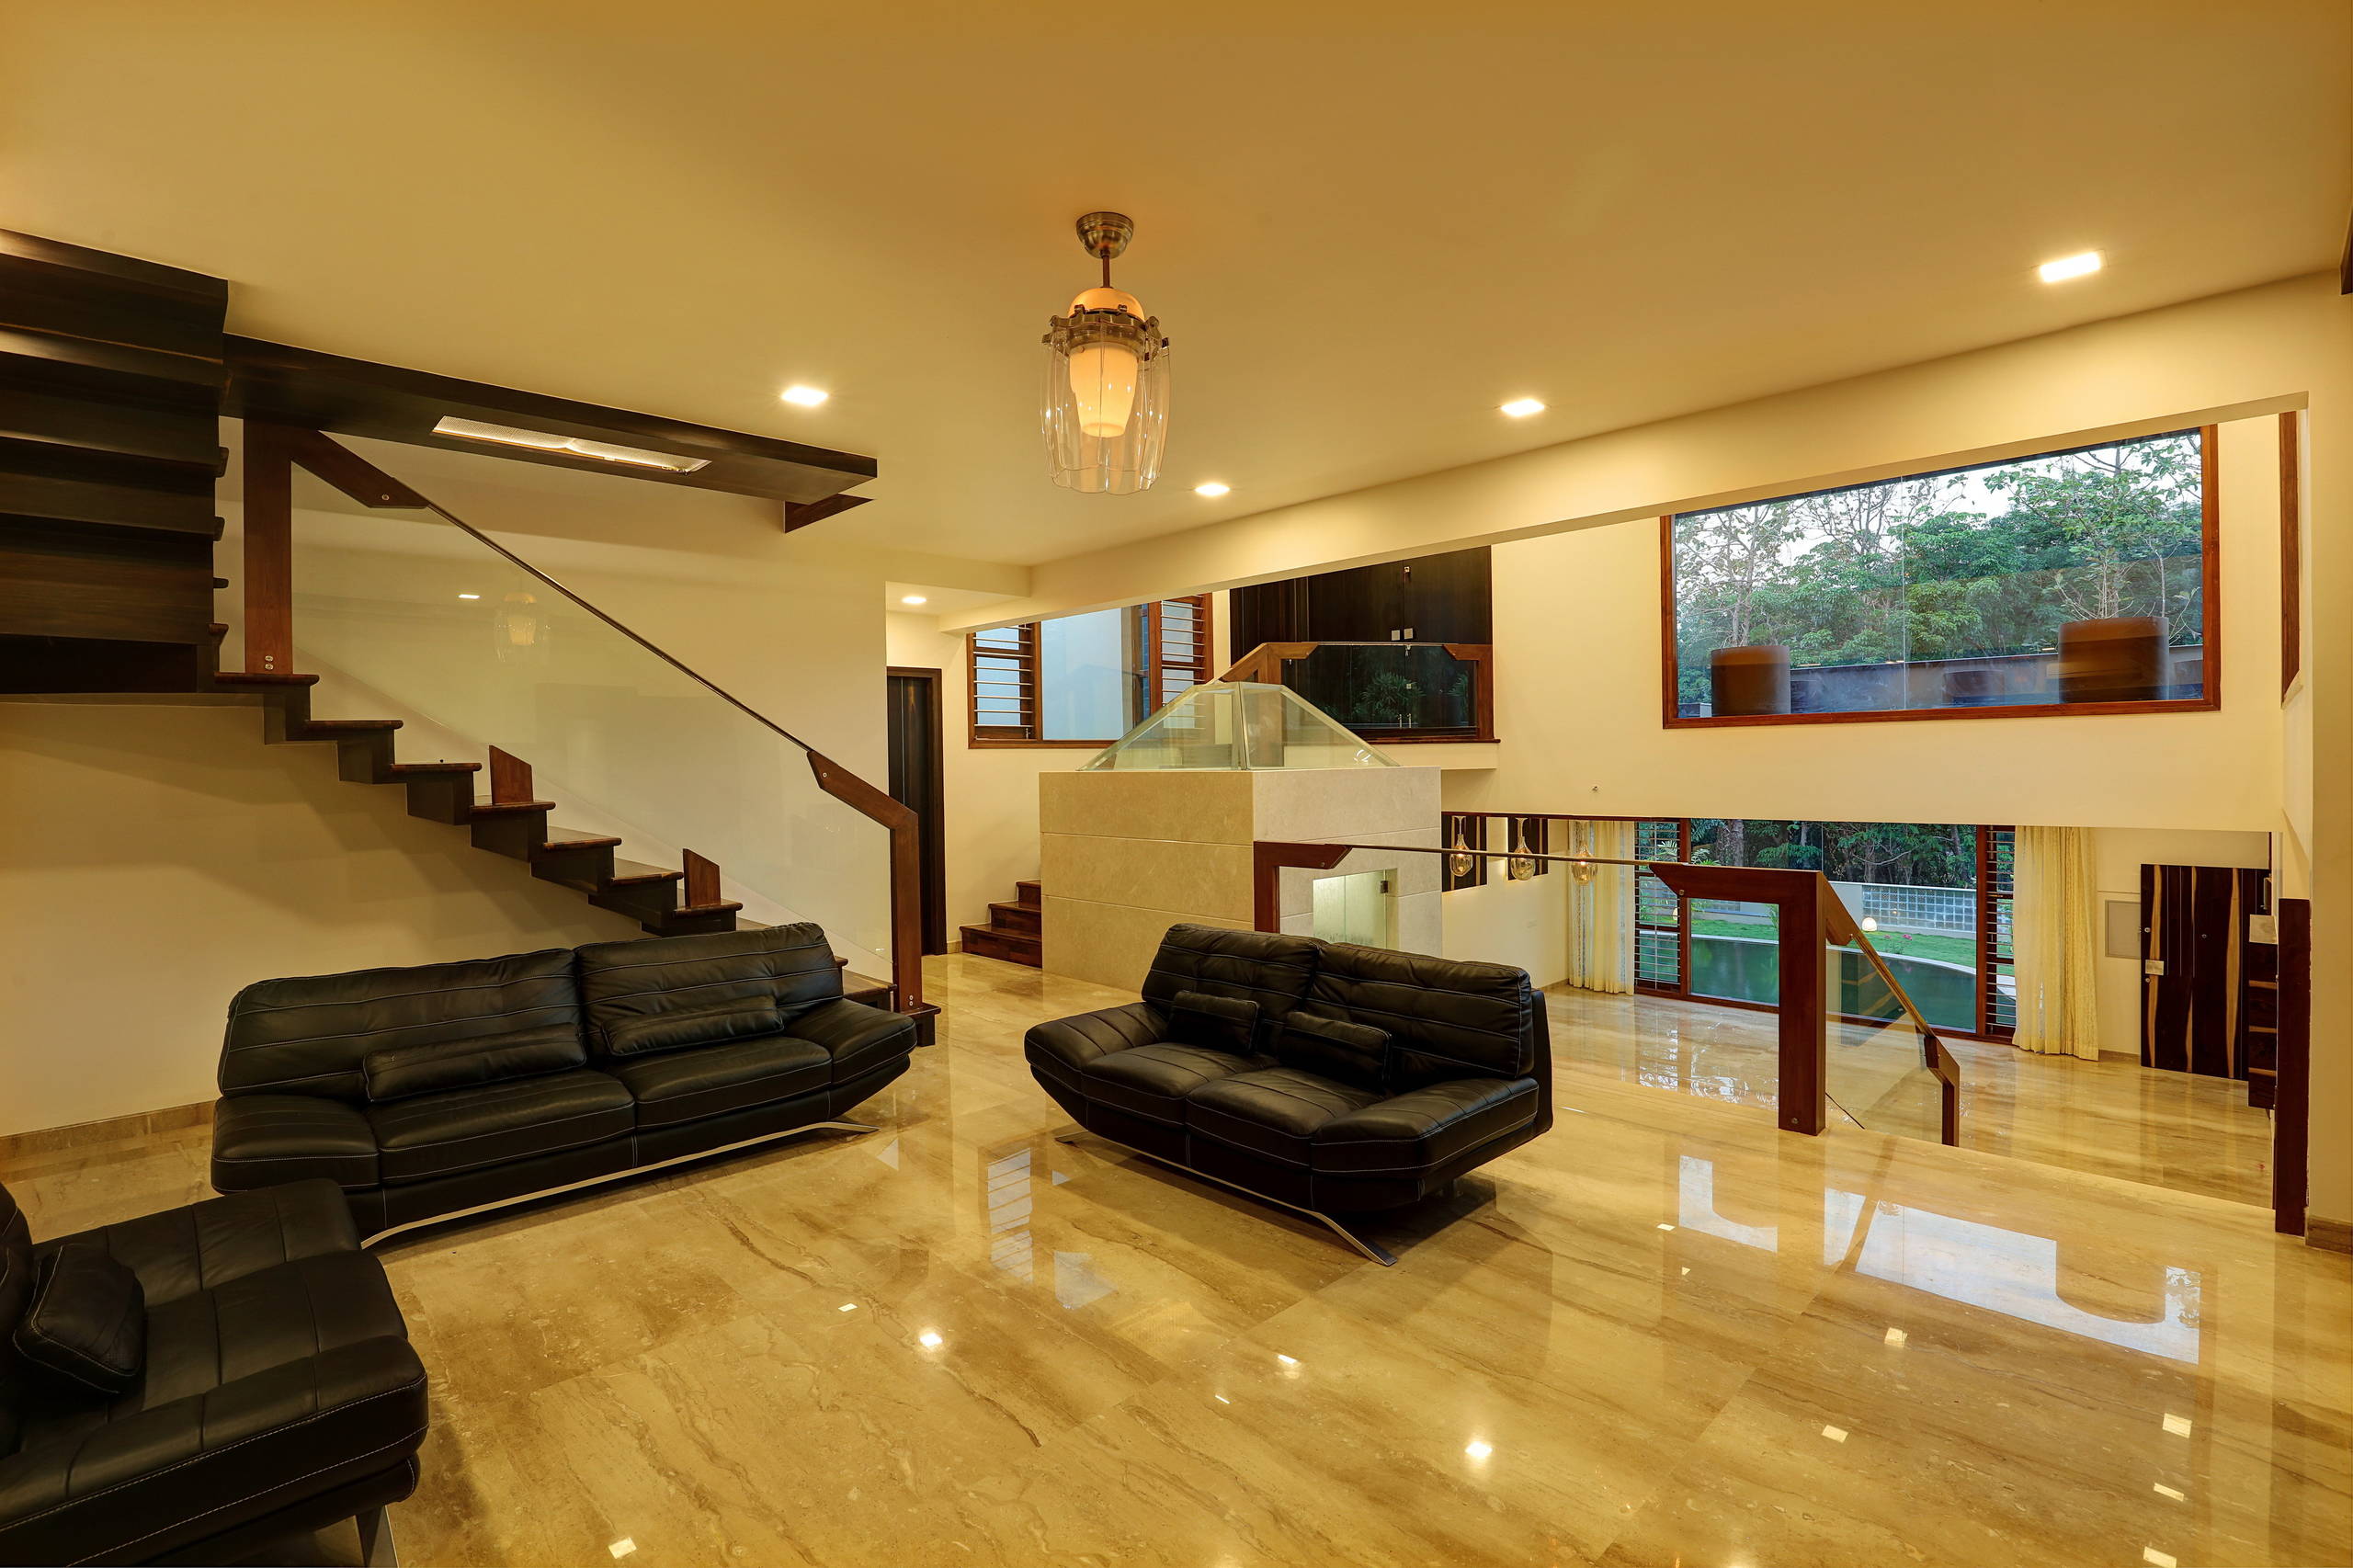 MR. UNNI RESIDENCE, Palakkad - Modern - Living Room - Bengaluru - by ALEX  JACOB ARCHITECT | Houzz